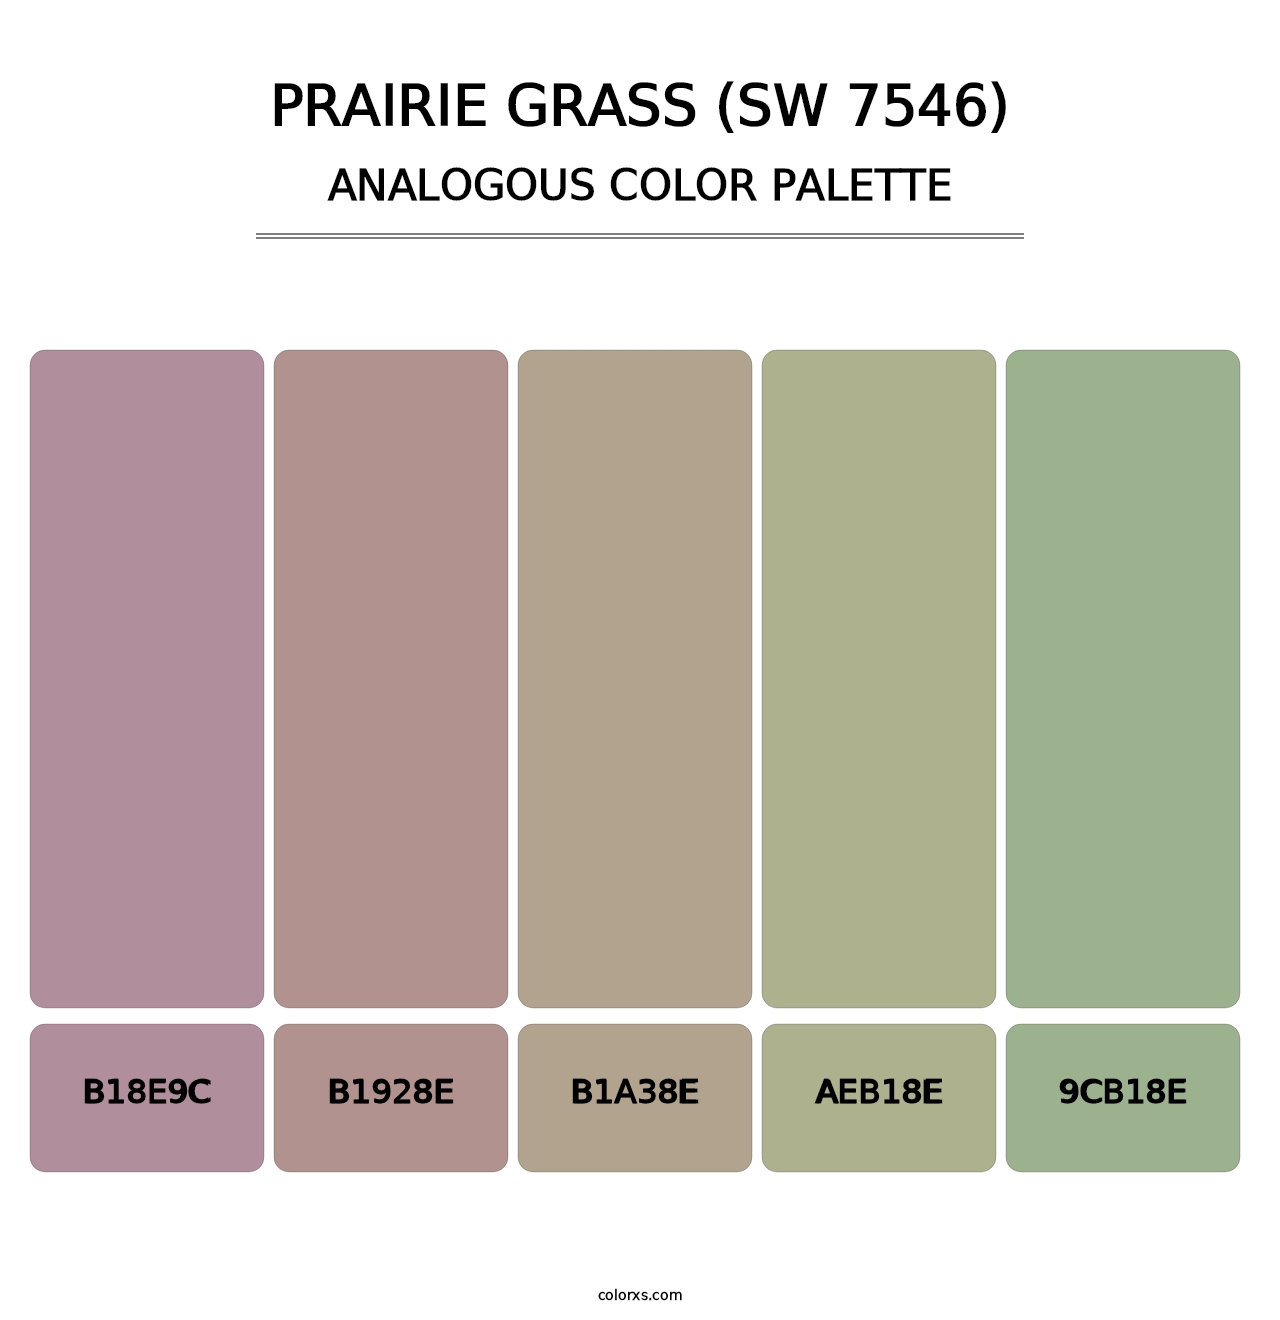 Prairie Grass (SW 7546) - Analogous Color Palette